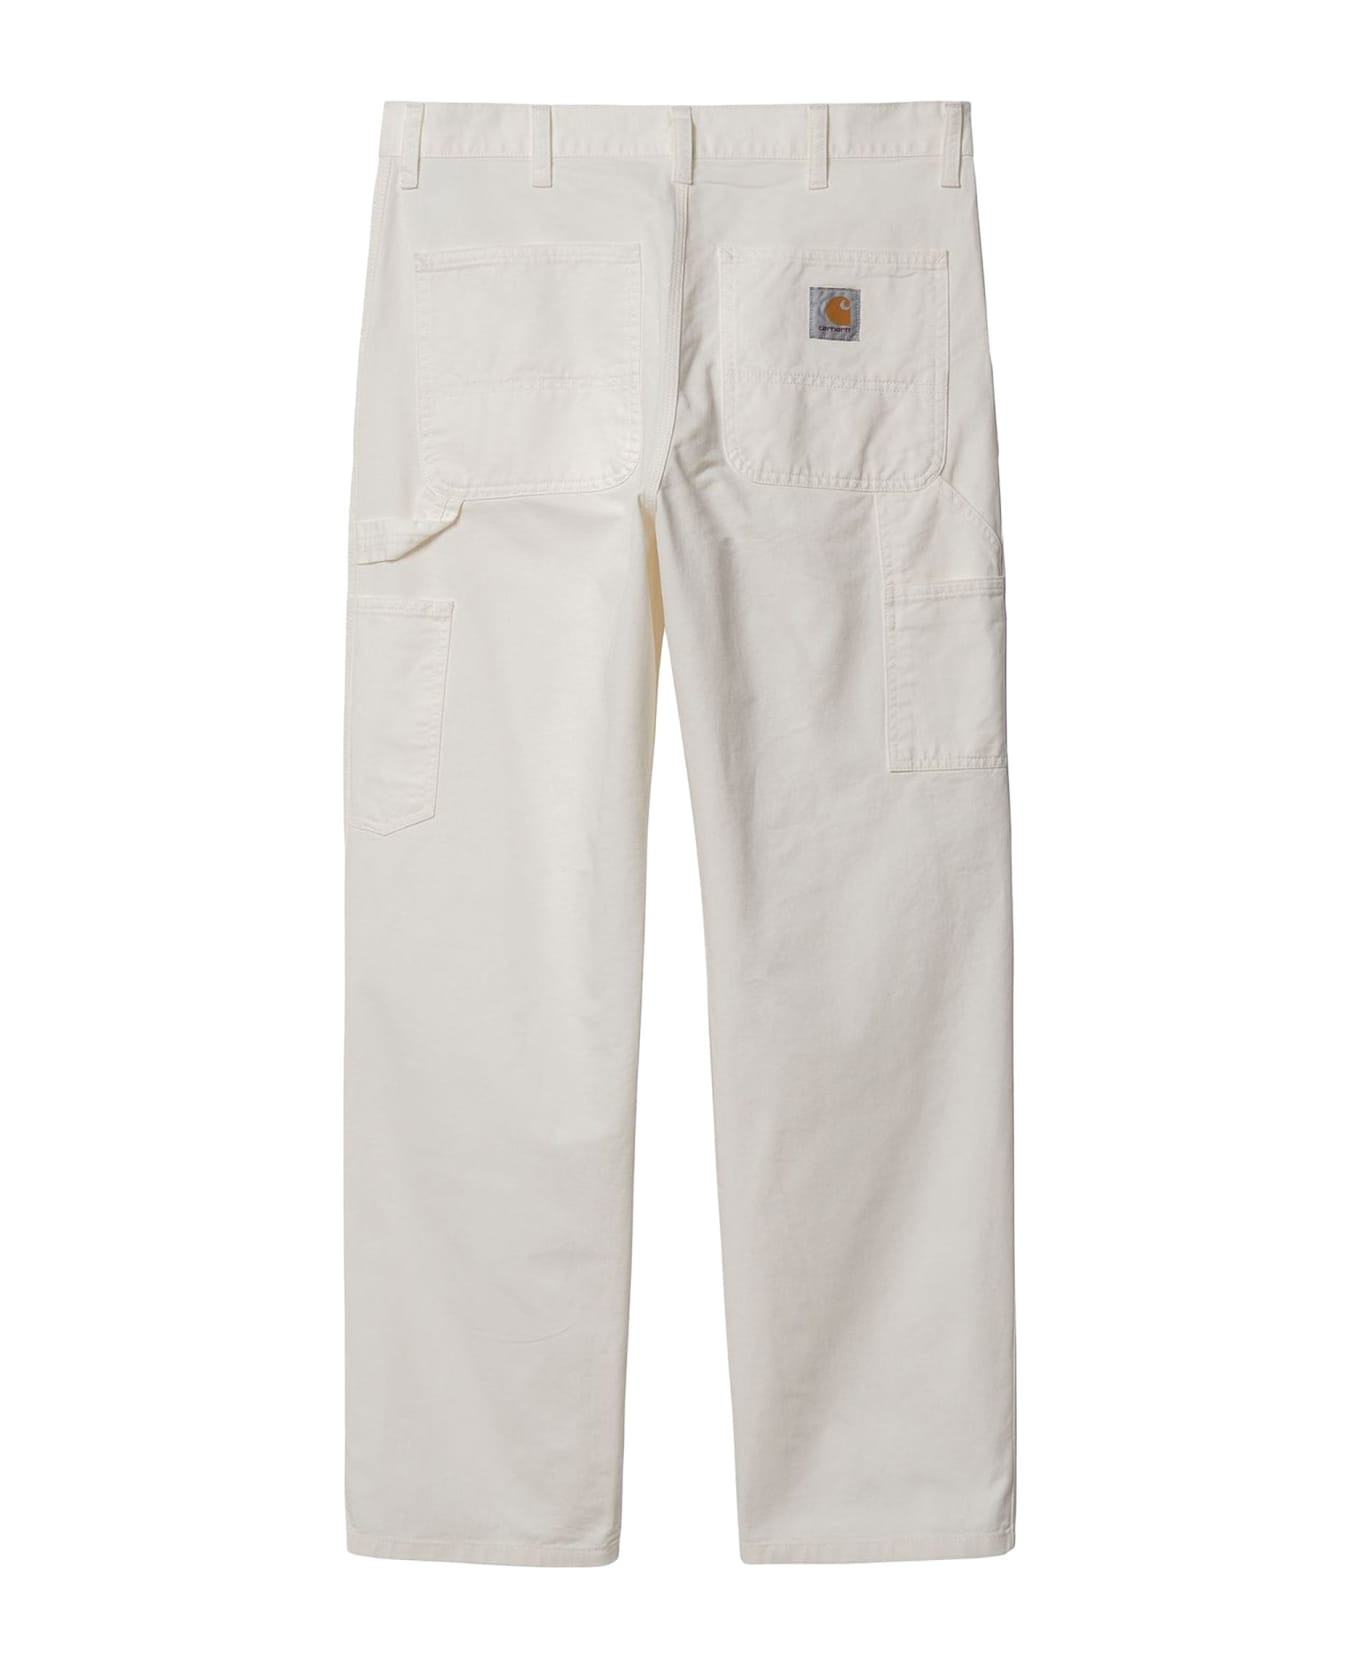 Carhartt Trousers White - White